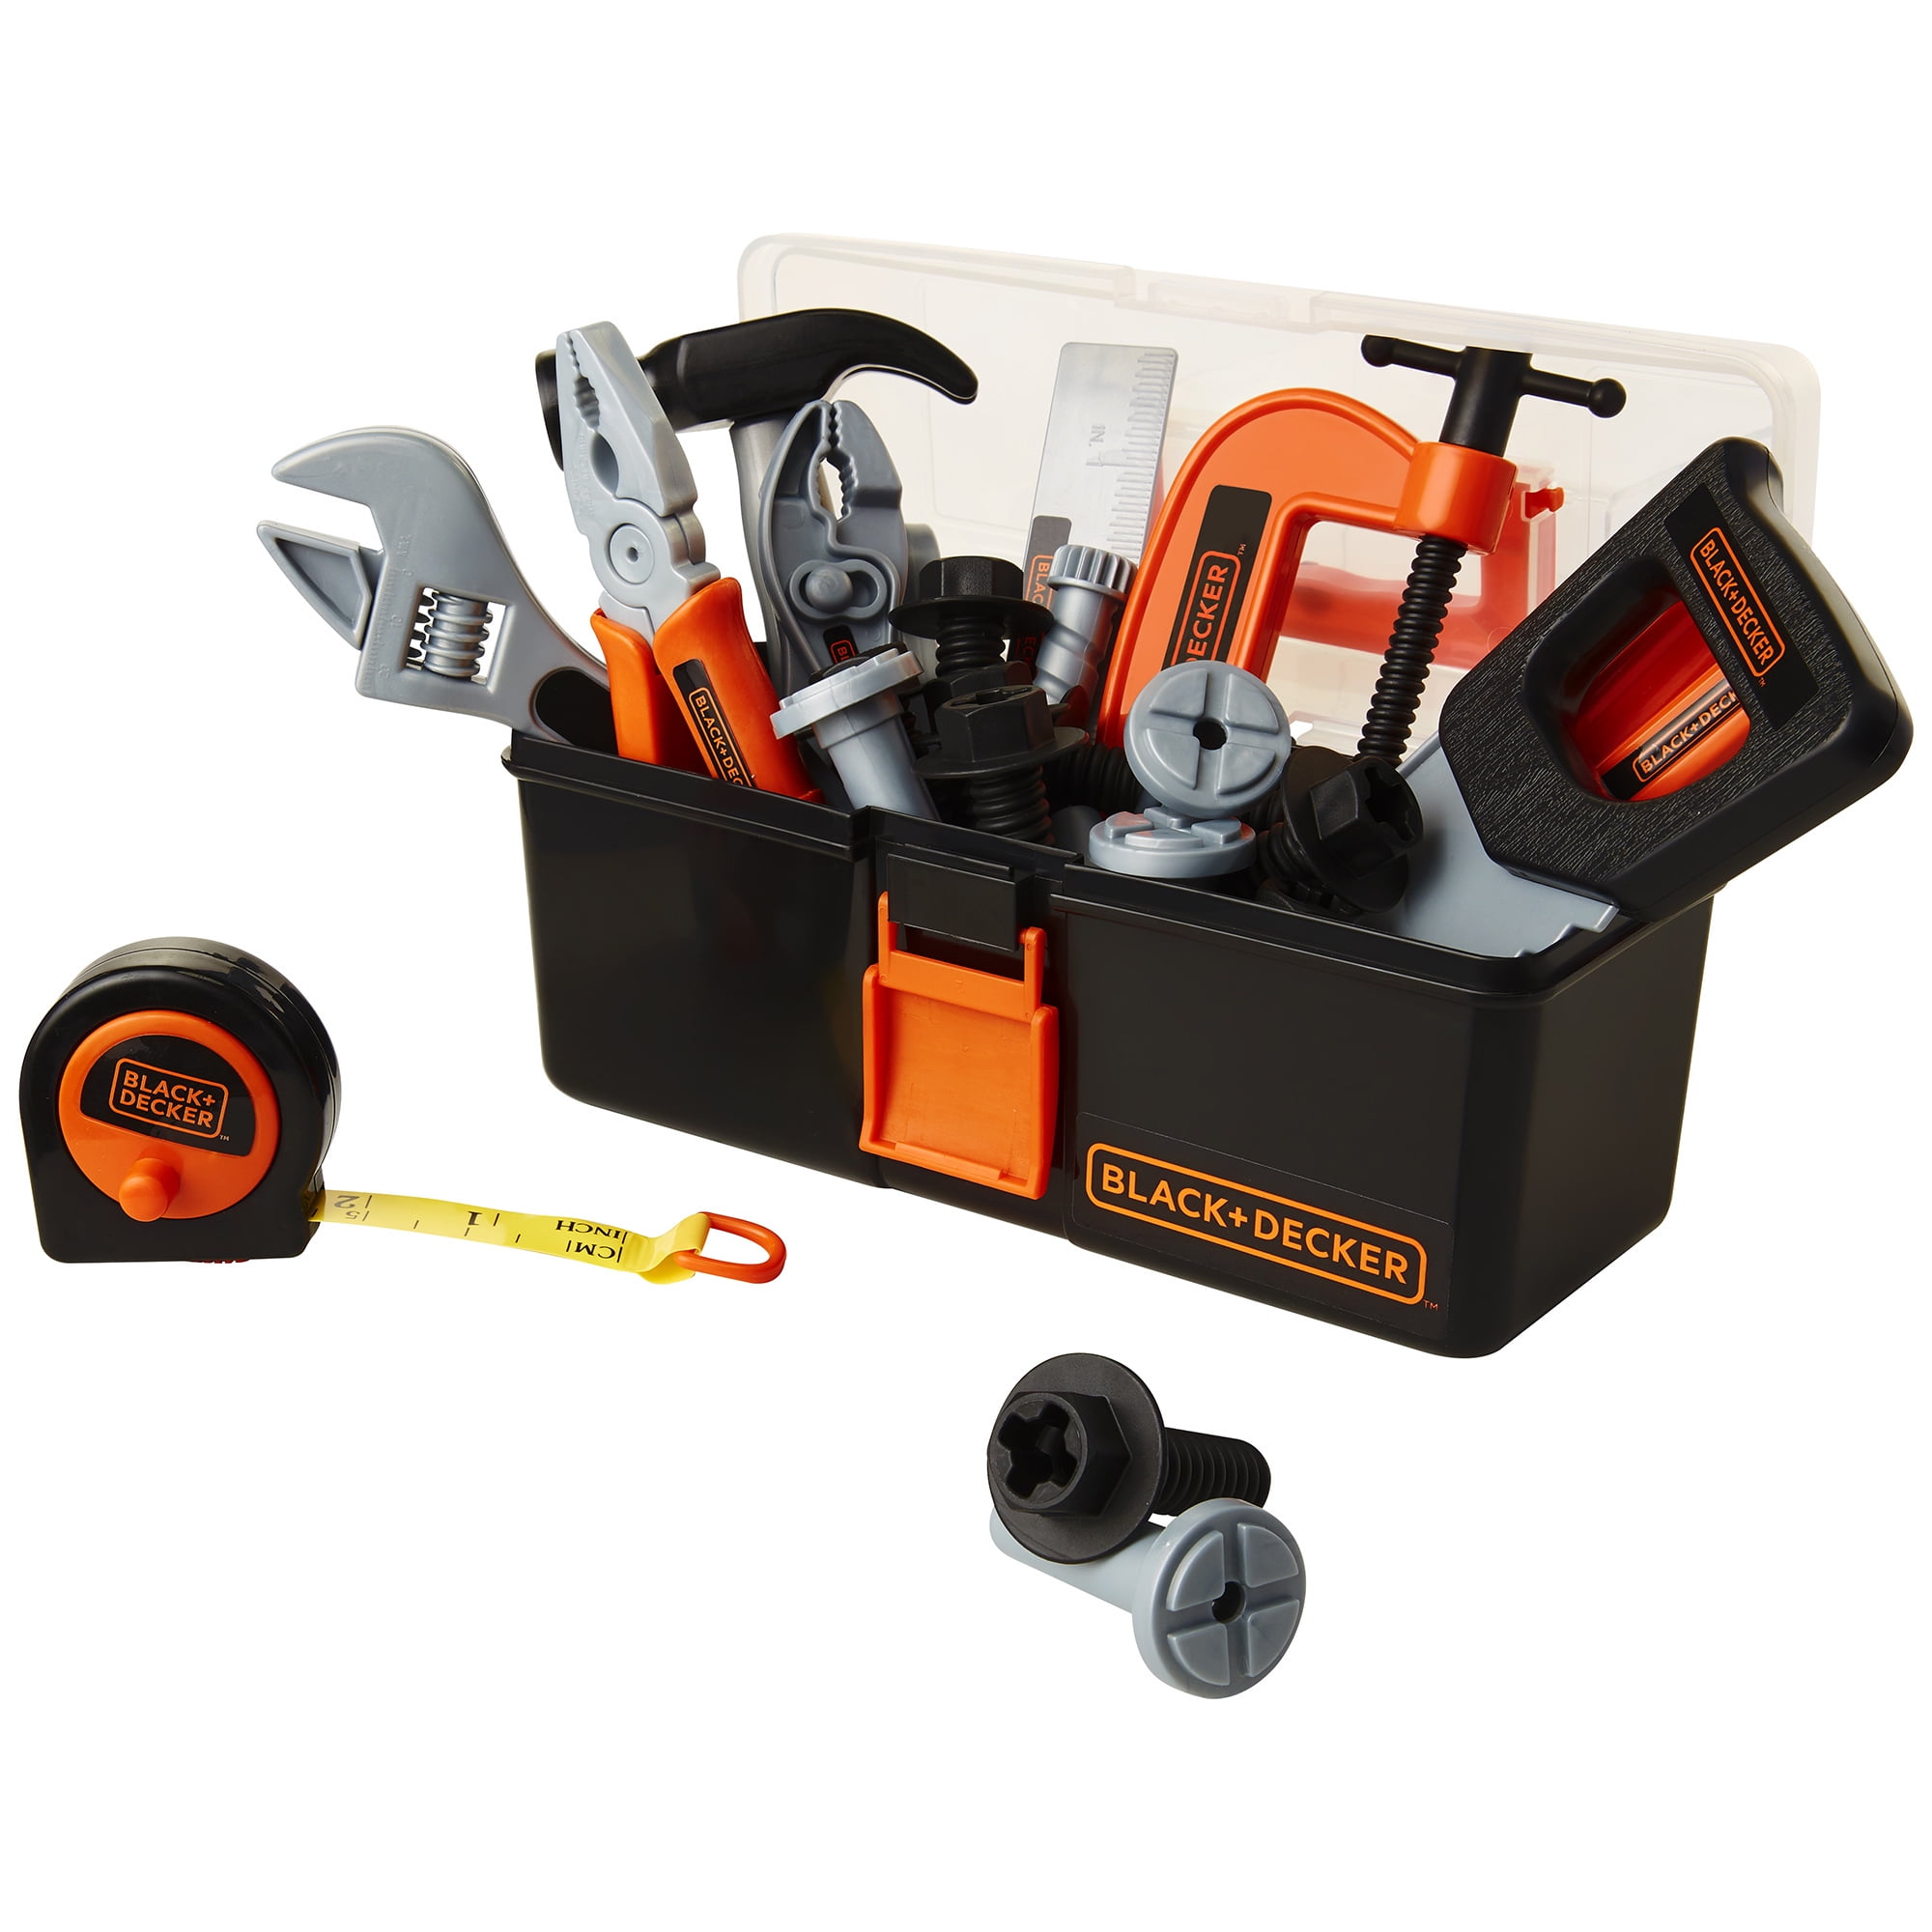 Black & Decker Junior Carpenter Tool Set with 50 tools and